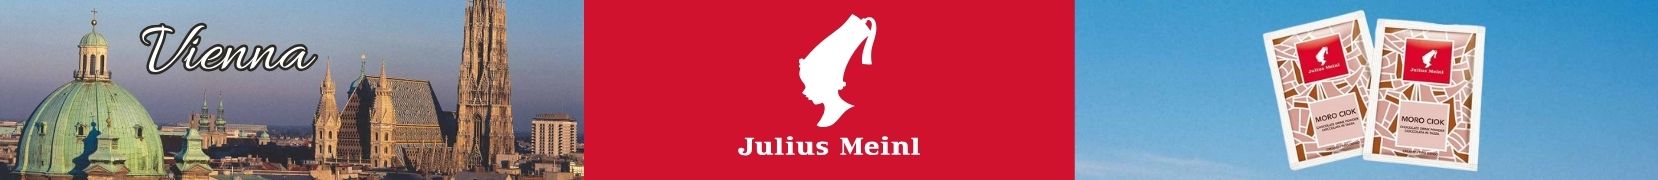 Julius Meinl Cocoa